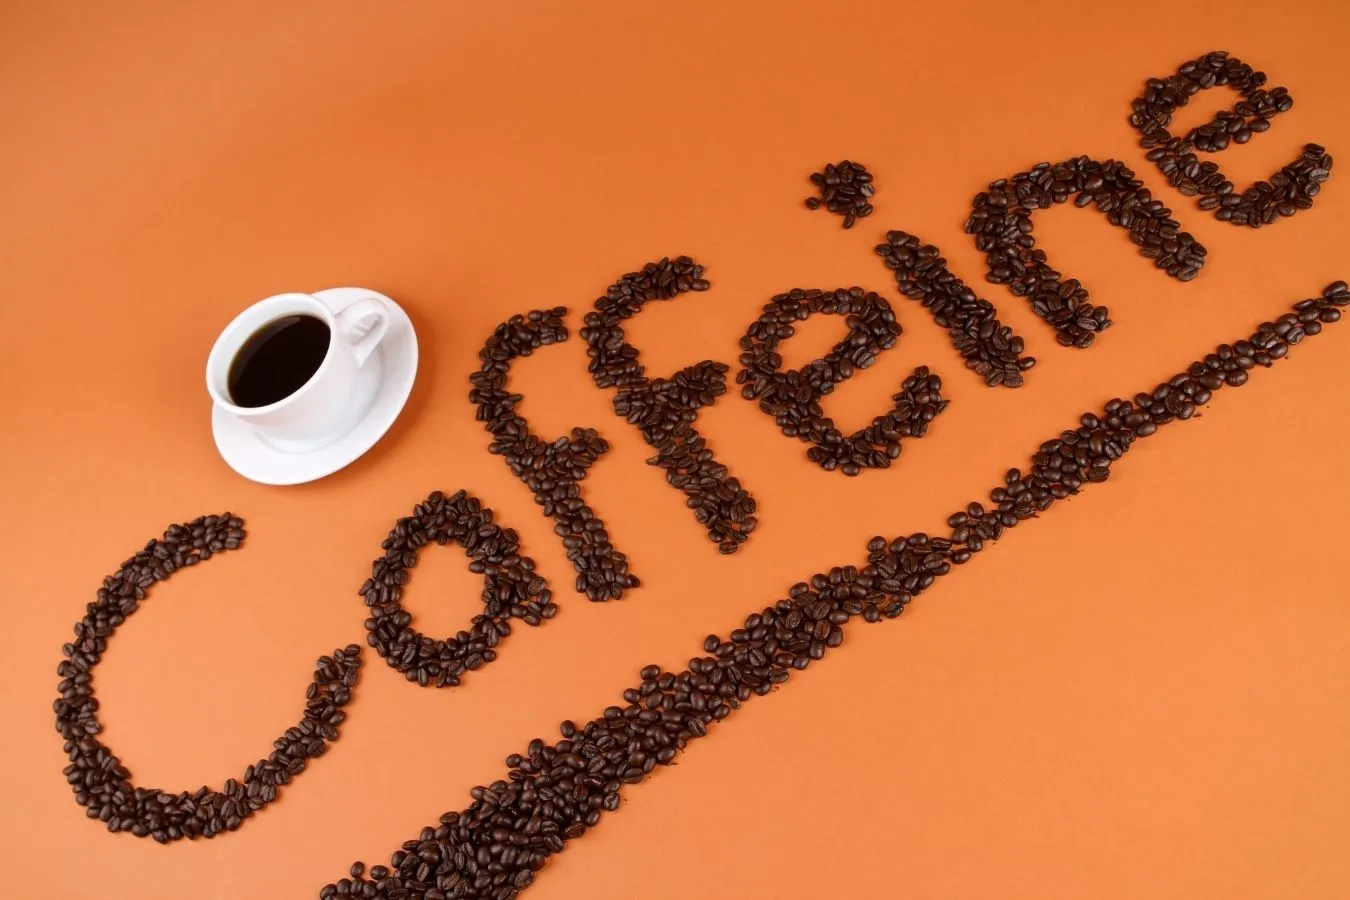 Is It True That Caffeine Can Slow Growth In Children